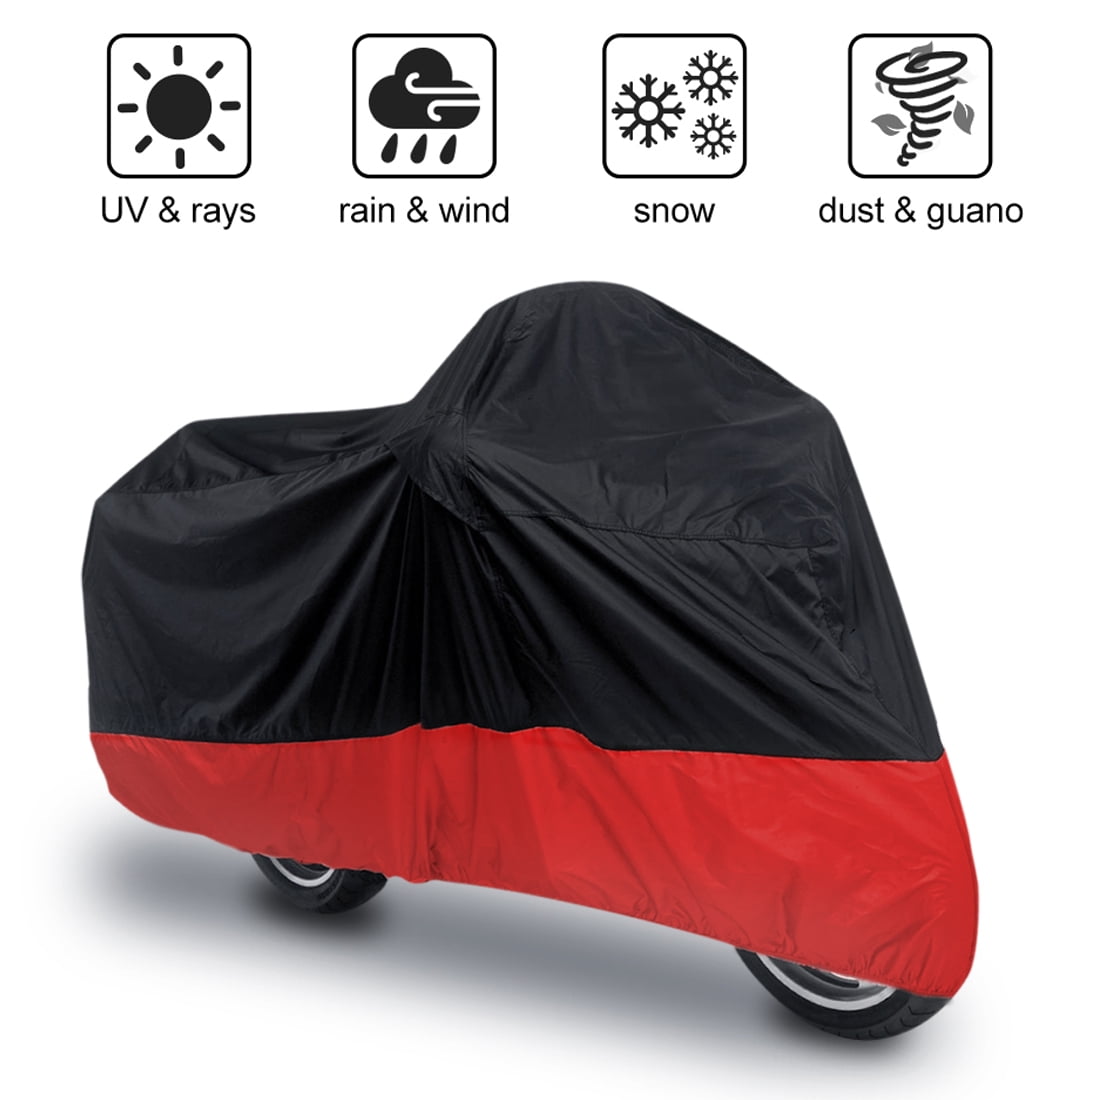 XXXL Motorcycle Cover Waterproof Black for Winter Outside Storage Snow Rain UV